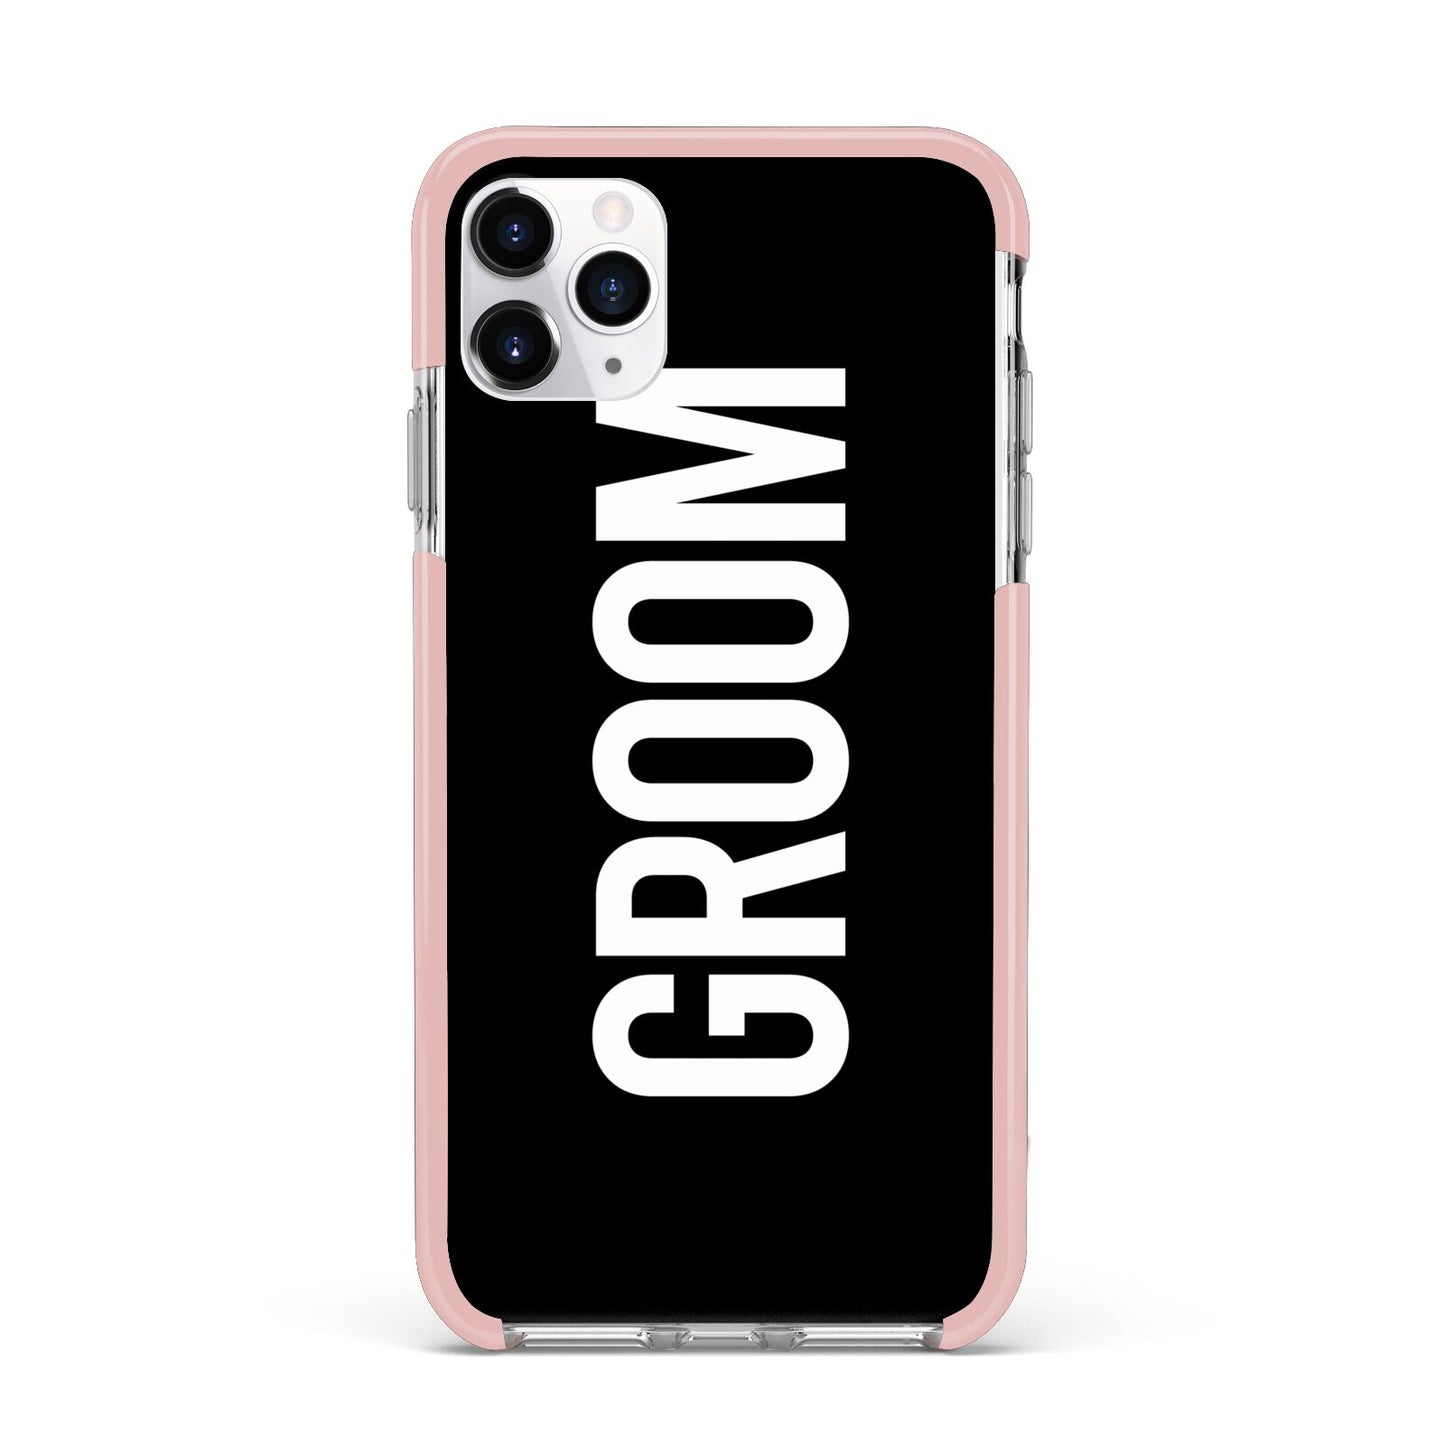 Groom iPhone 11 Pro Max Impact Pink Edge Case